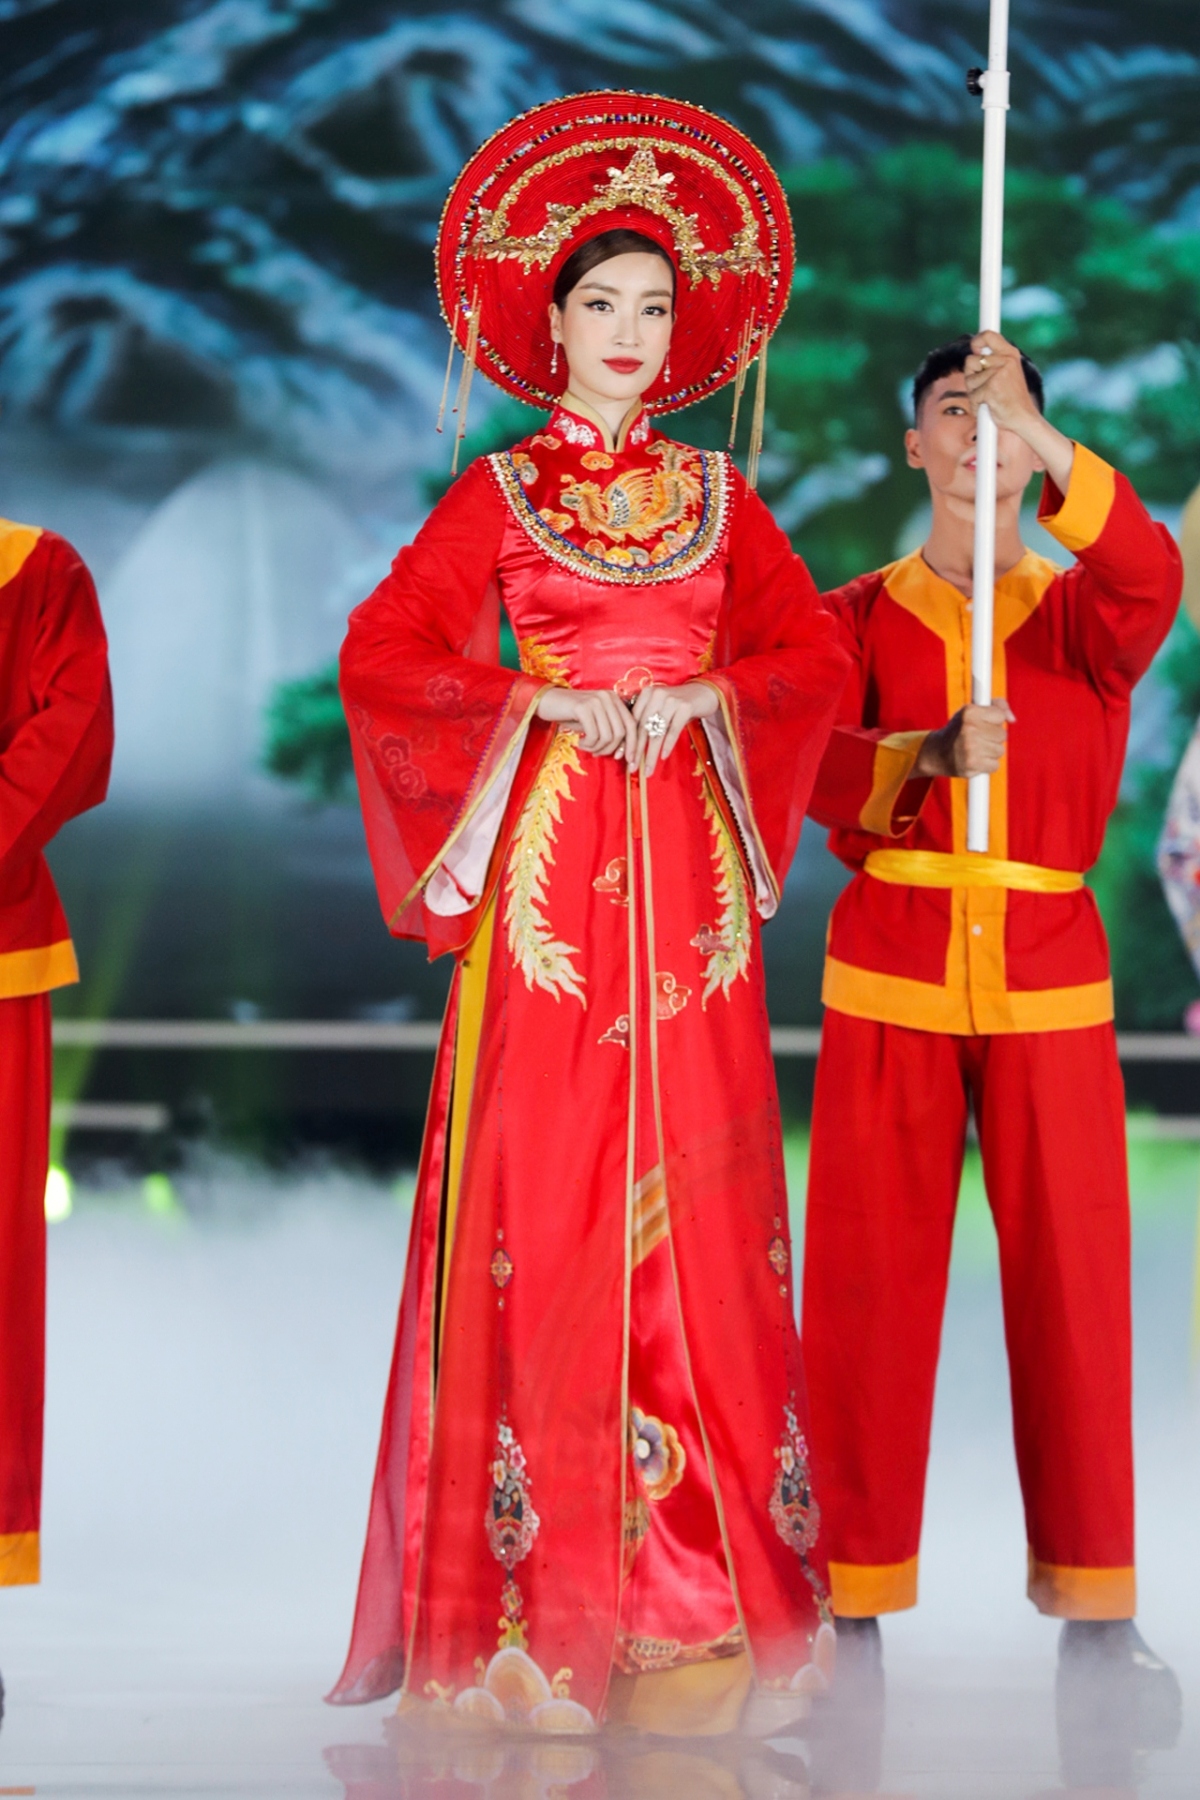 Áo dài – Traditional Vietnamese dress – The Sandy Chronicles